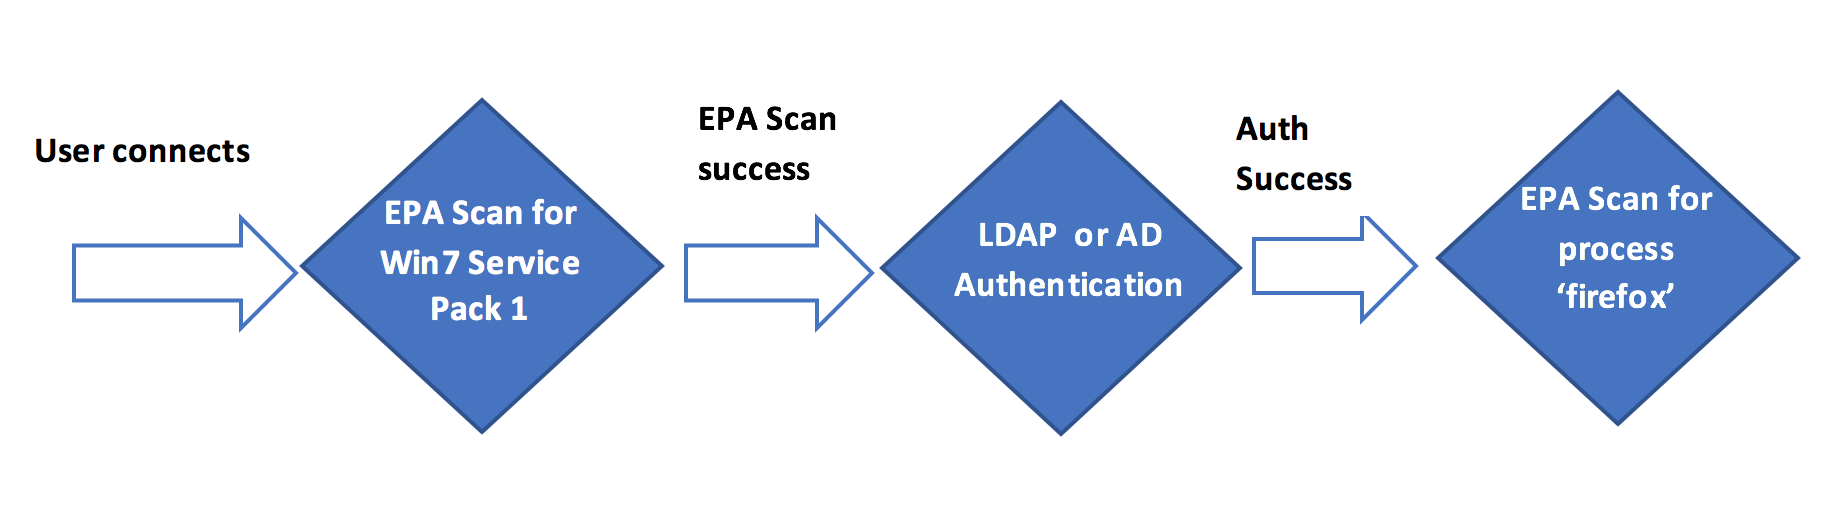 nFactor または多要素認証の初期チェックとして使用される EPA スキャンの表現